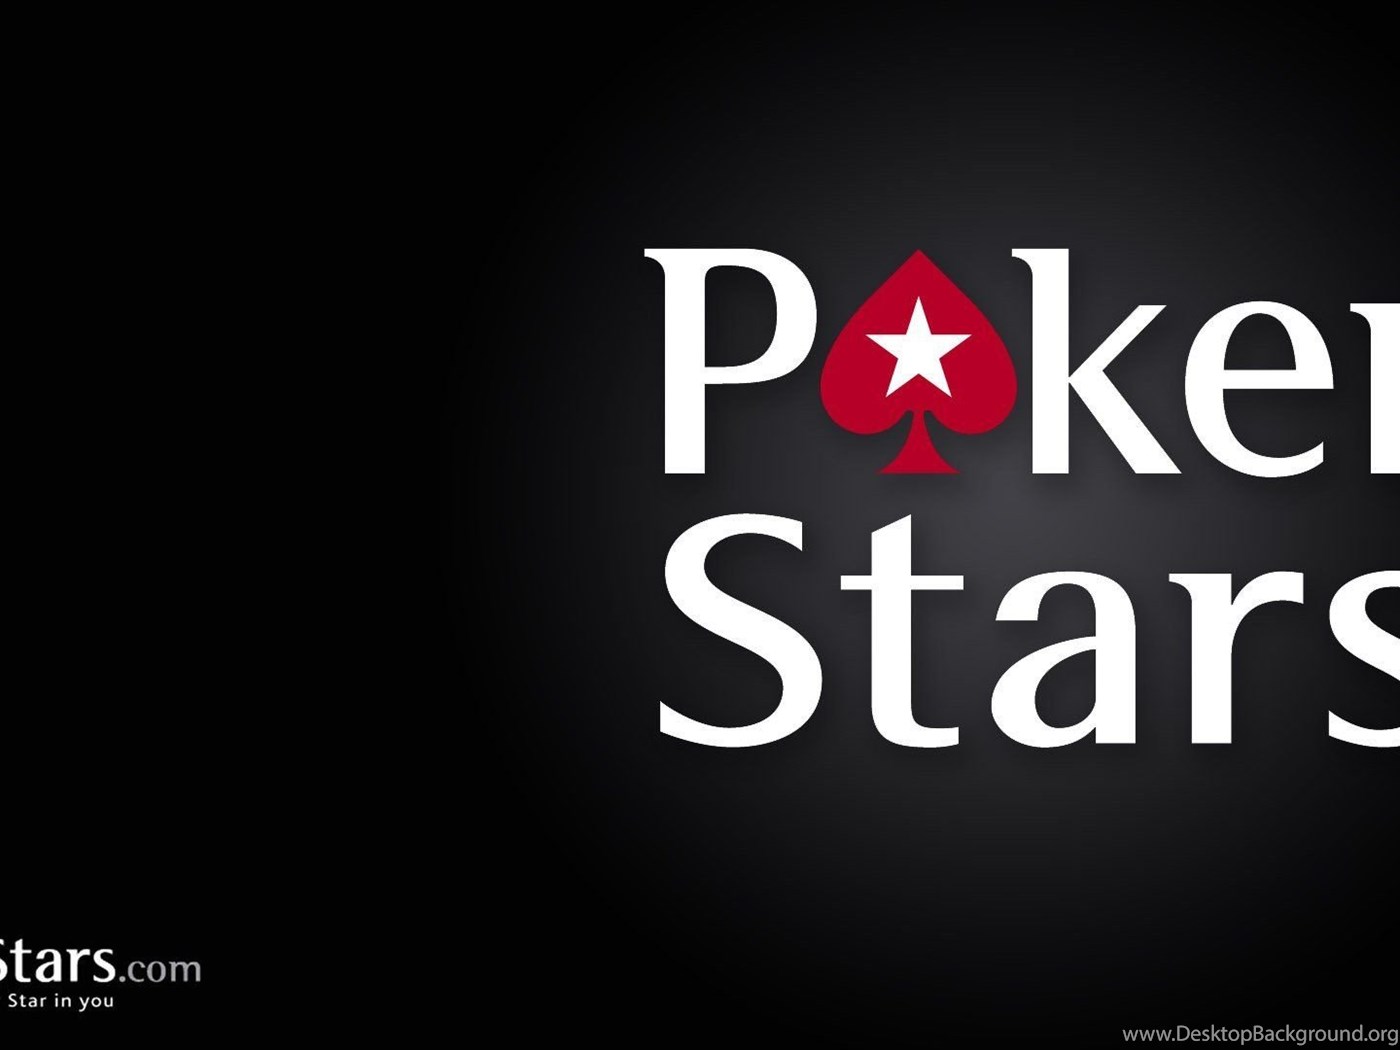 Poker stars com. Pokerstars. Pokerstars лого. Покер Стар. Игра Покер старс.